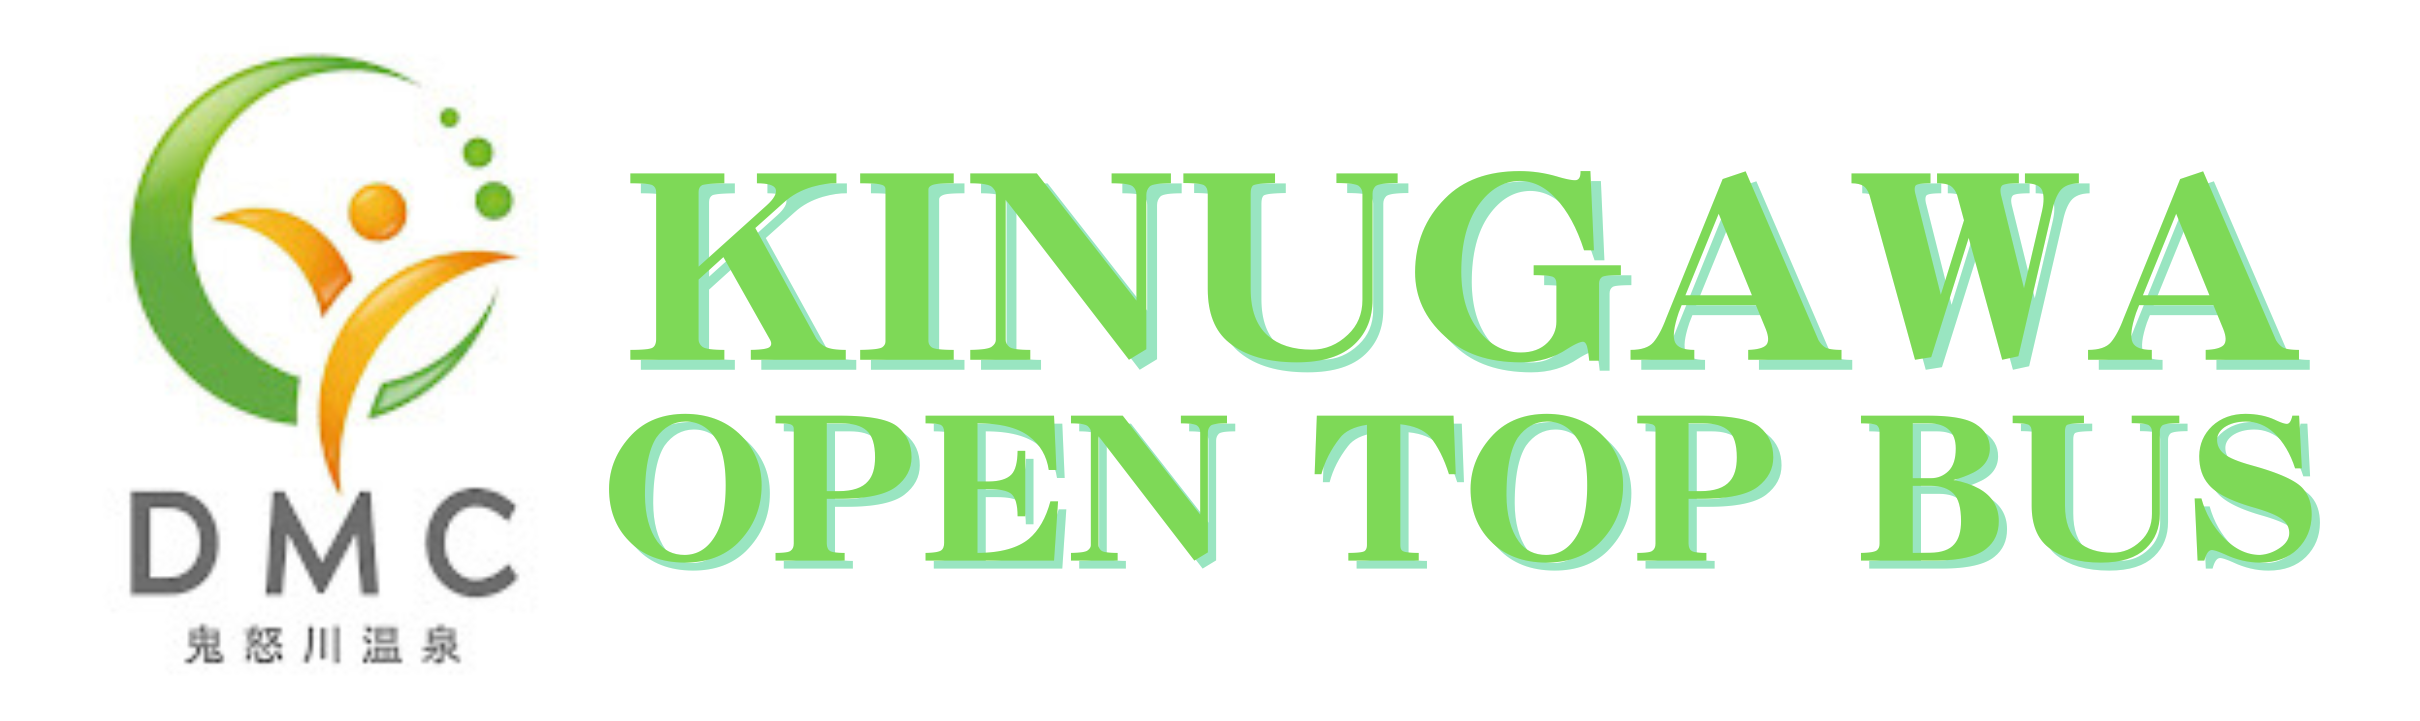 KINUGAWAオープントップバス公式サイト